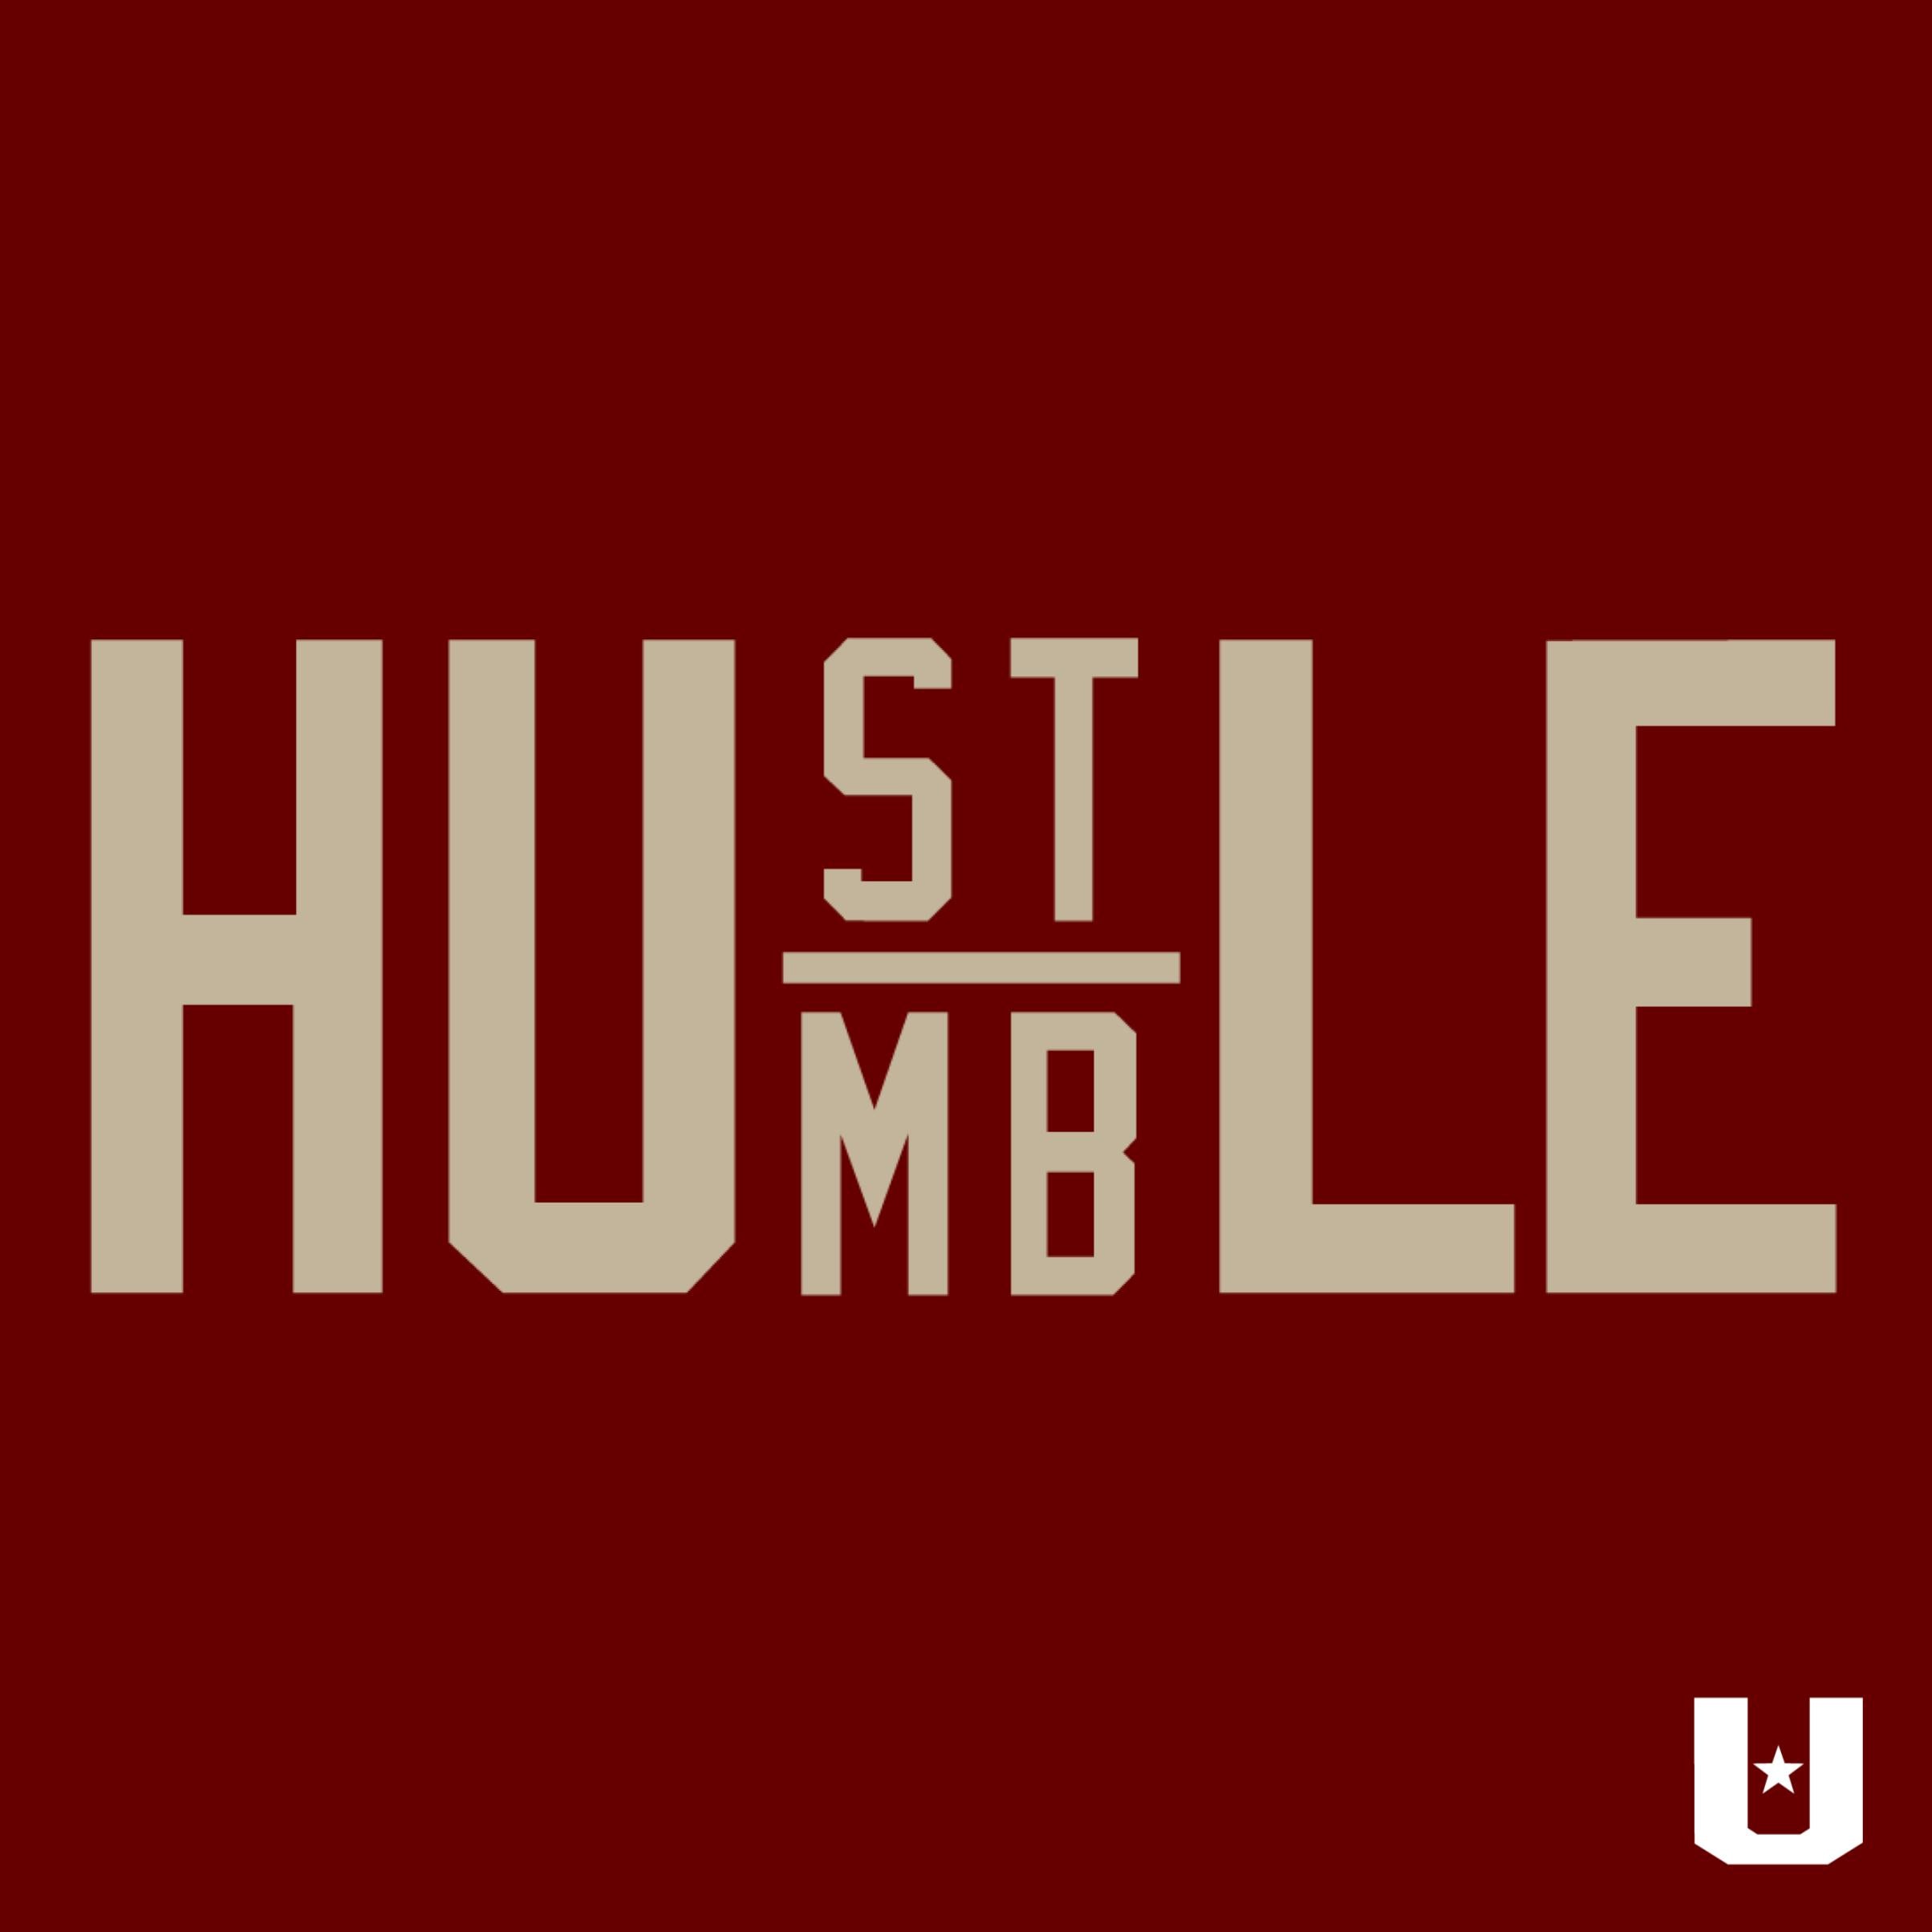 Hustle/Humble